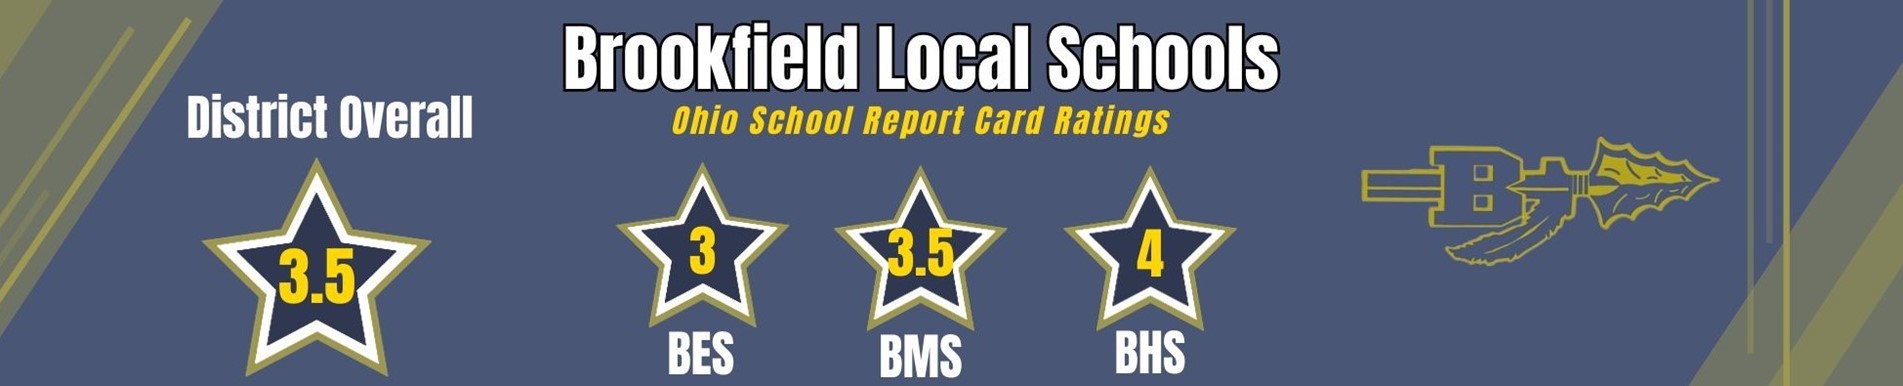 State report card ratings